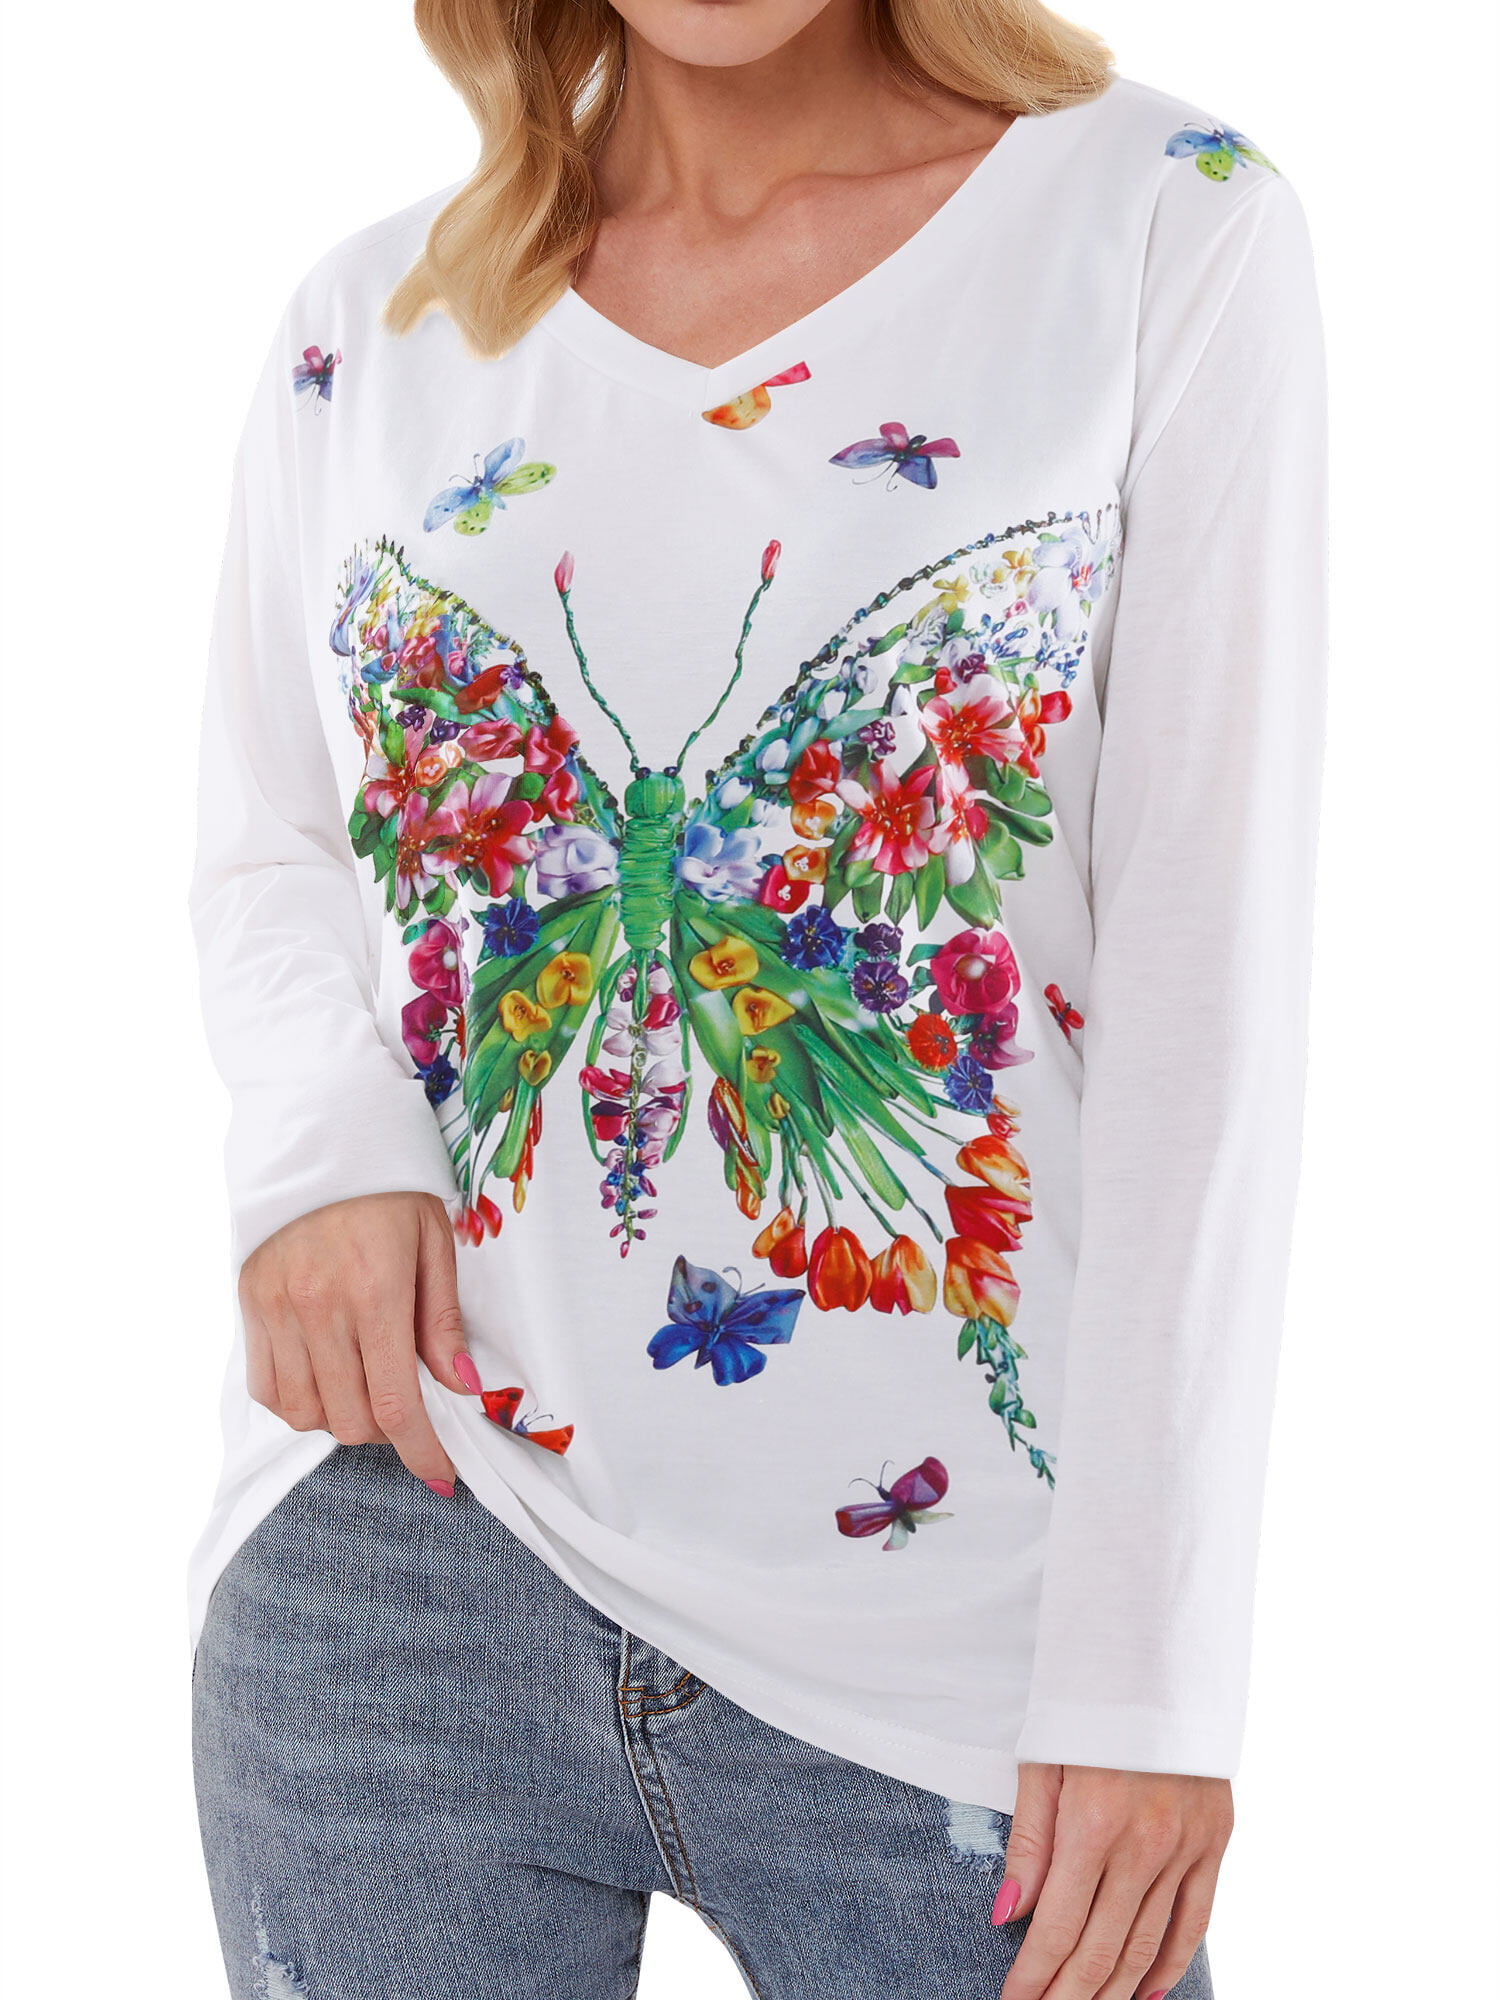 Twzh Women Butterflies Graphic Print Crew Neck Long Sleeve Pullover Top